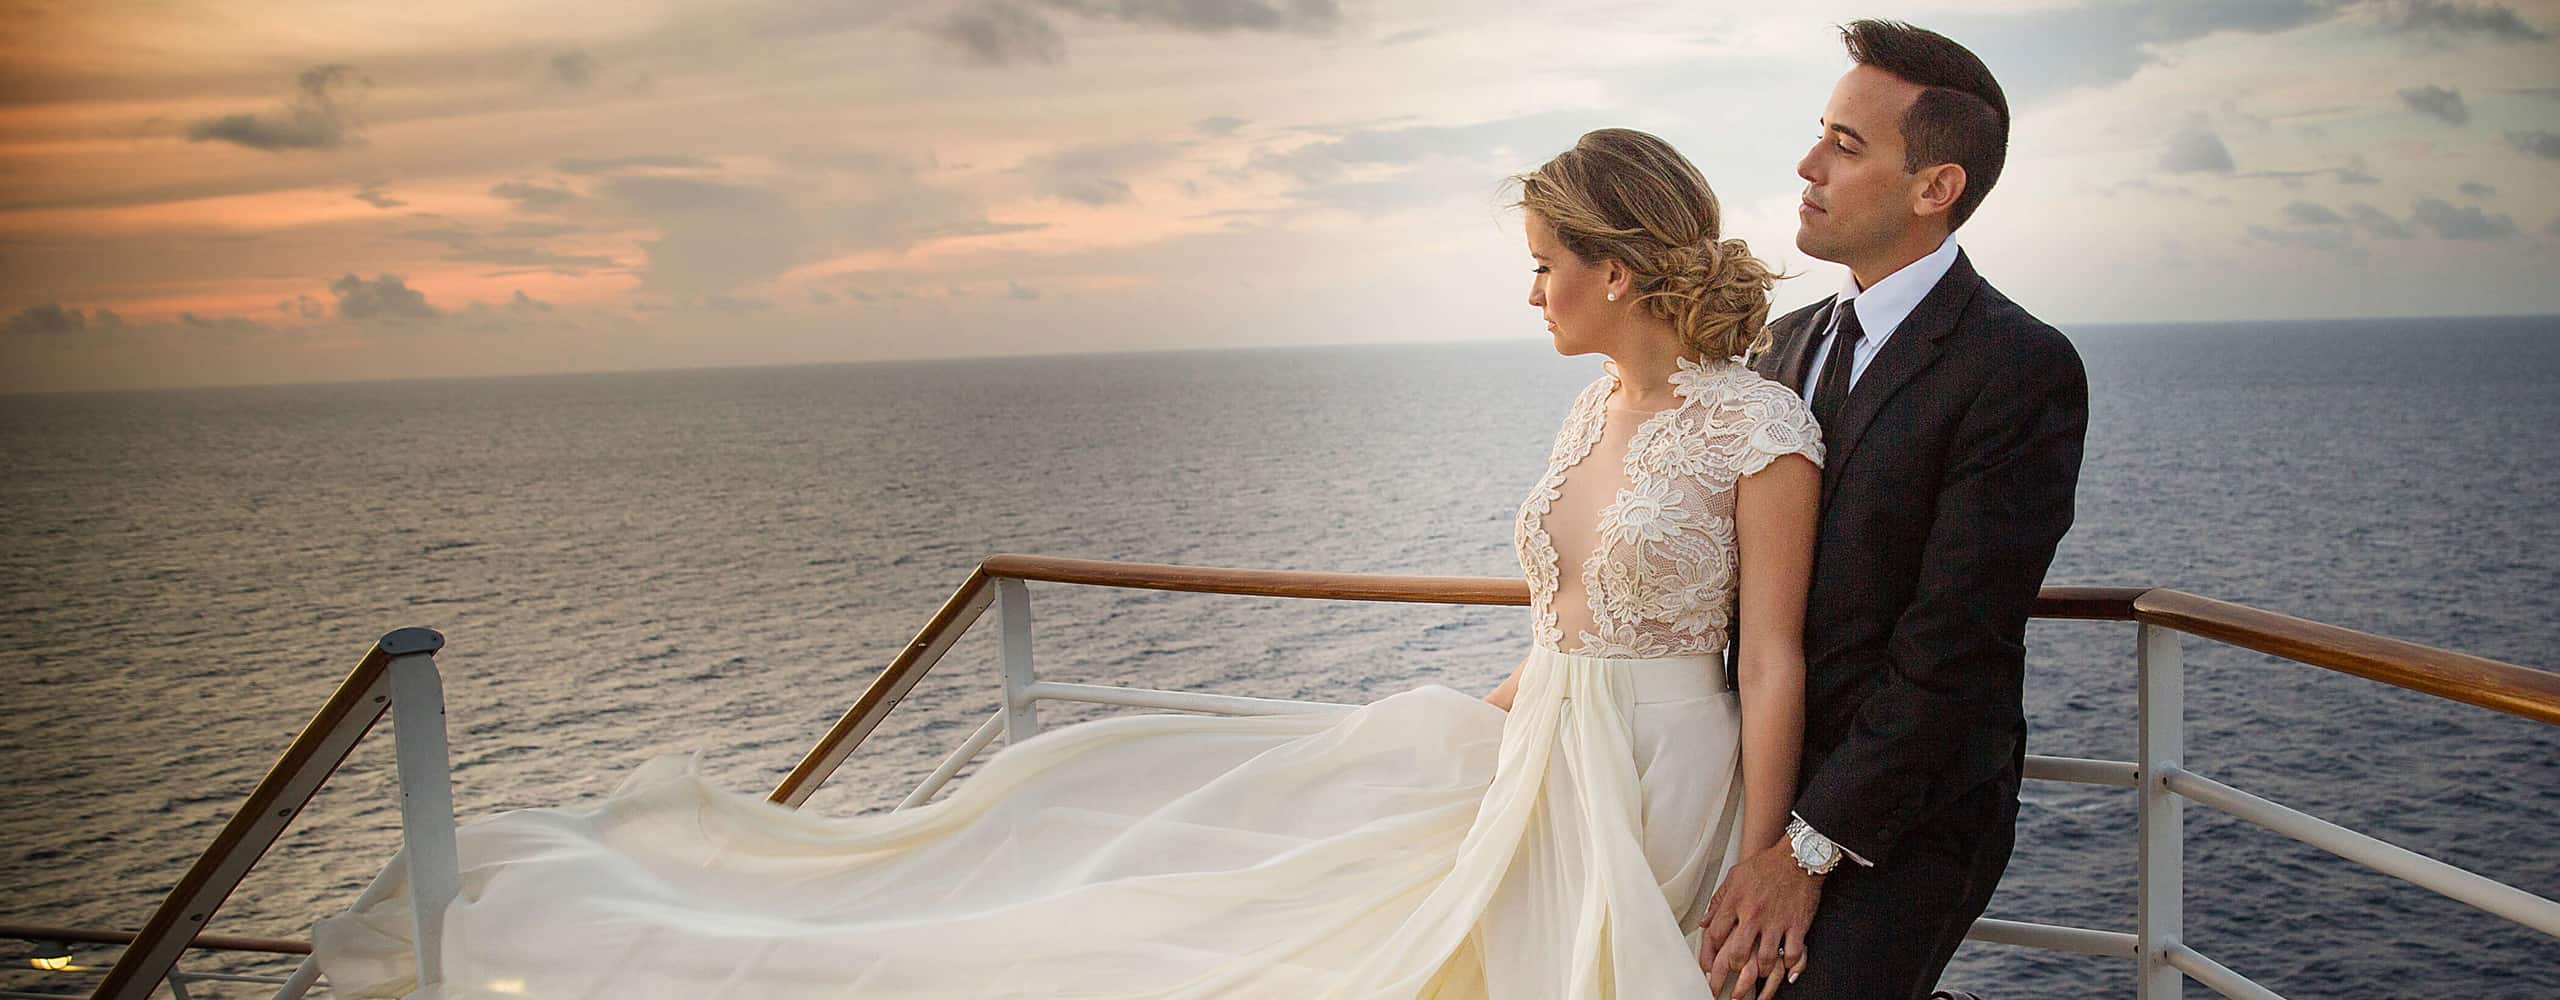 Destination Wedding At Sea